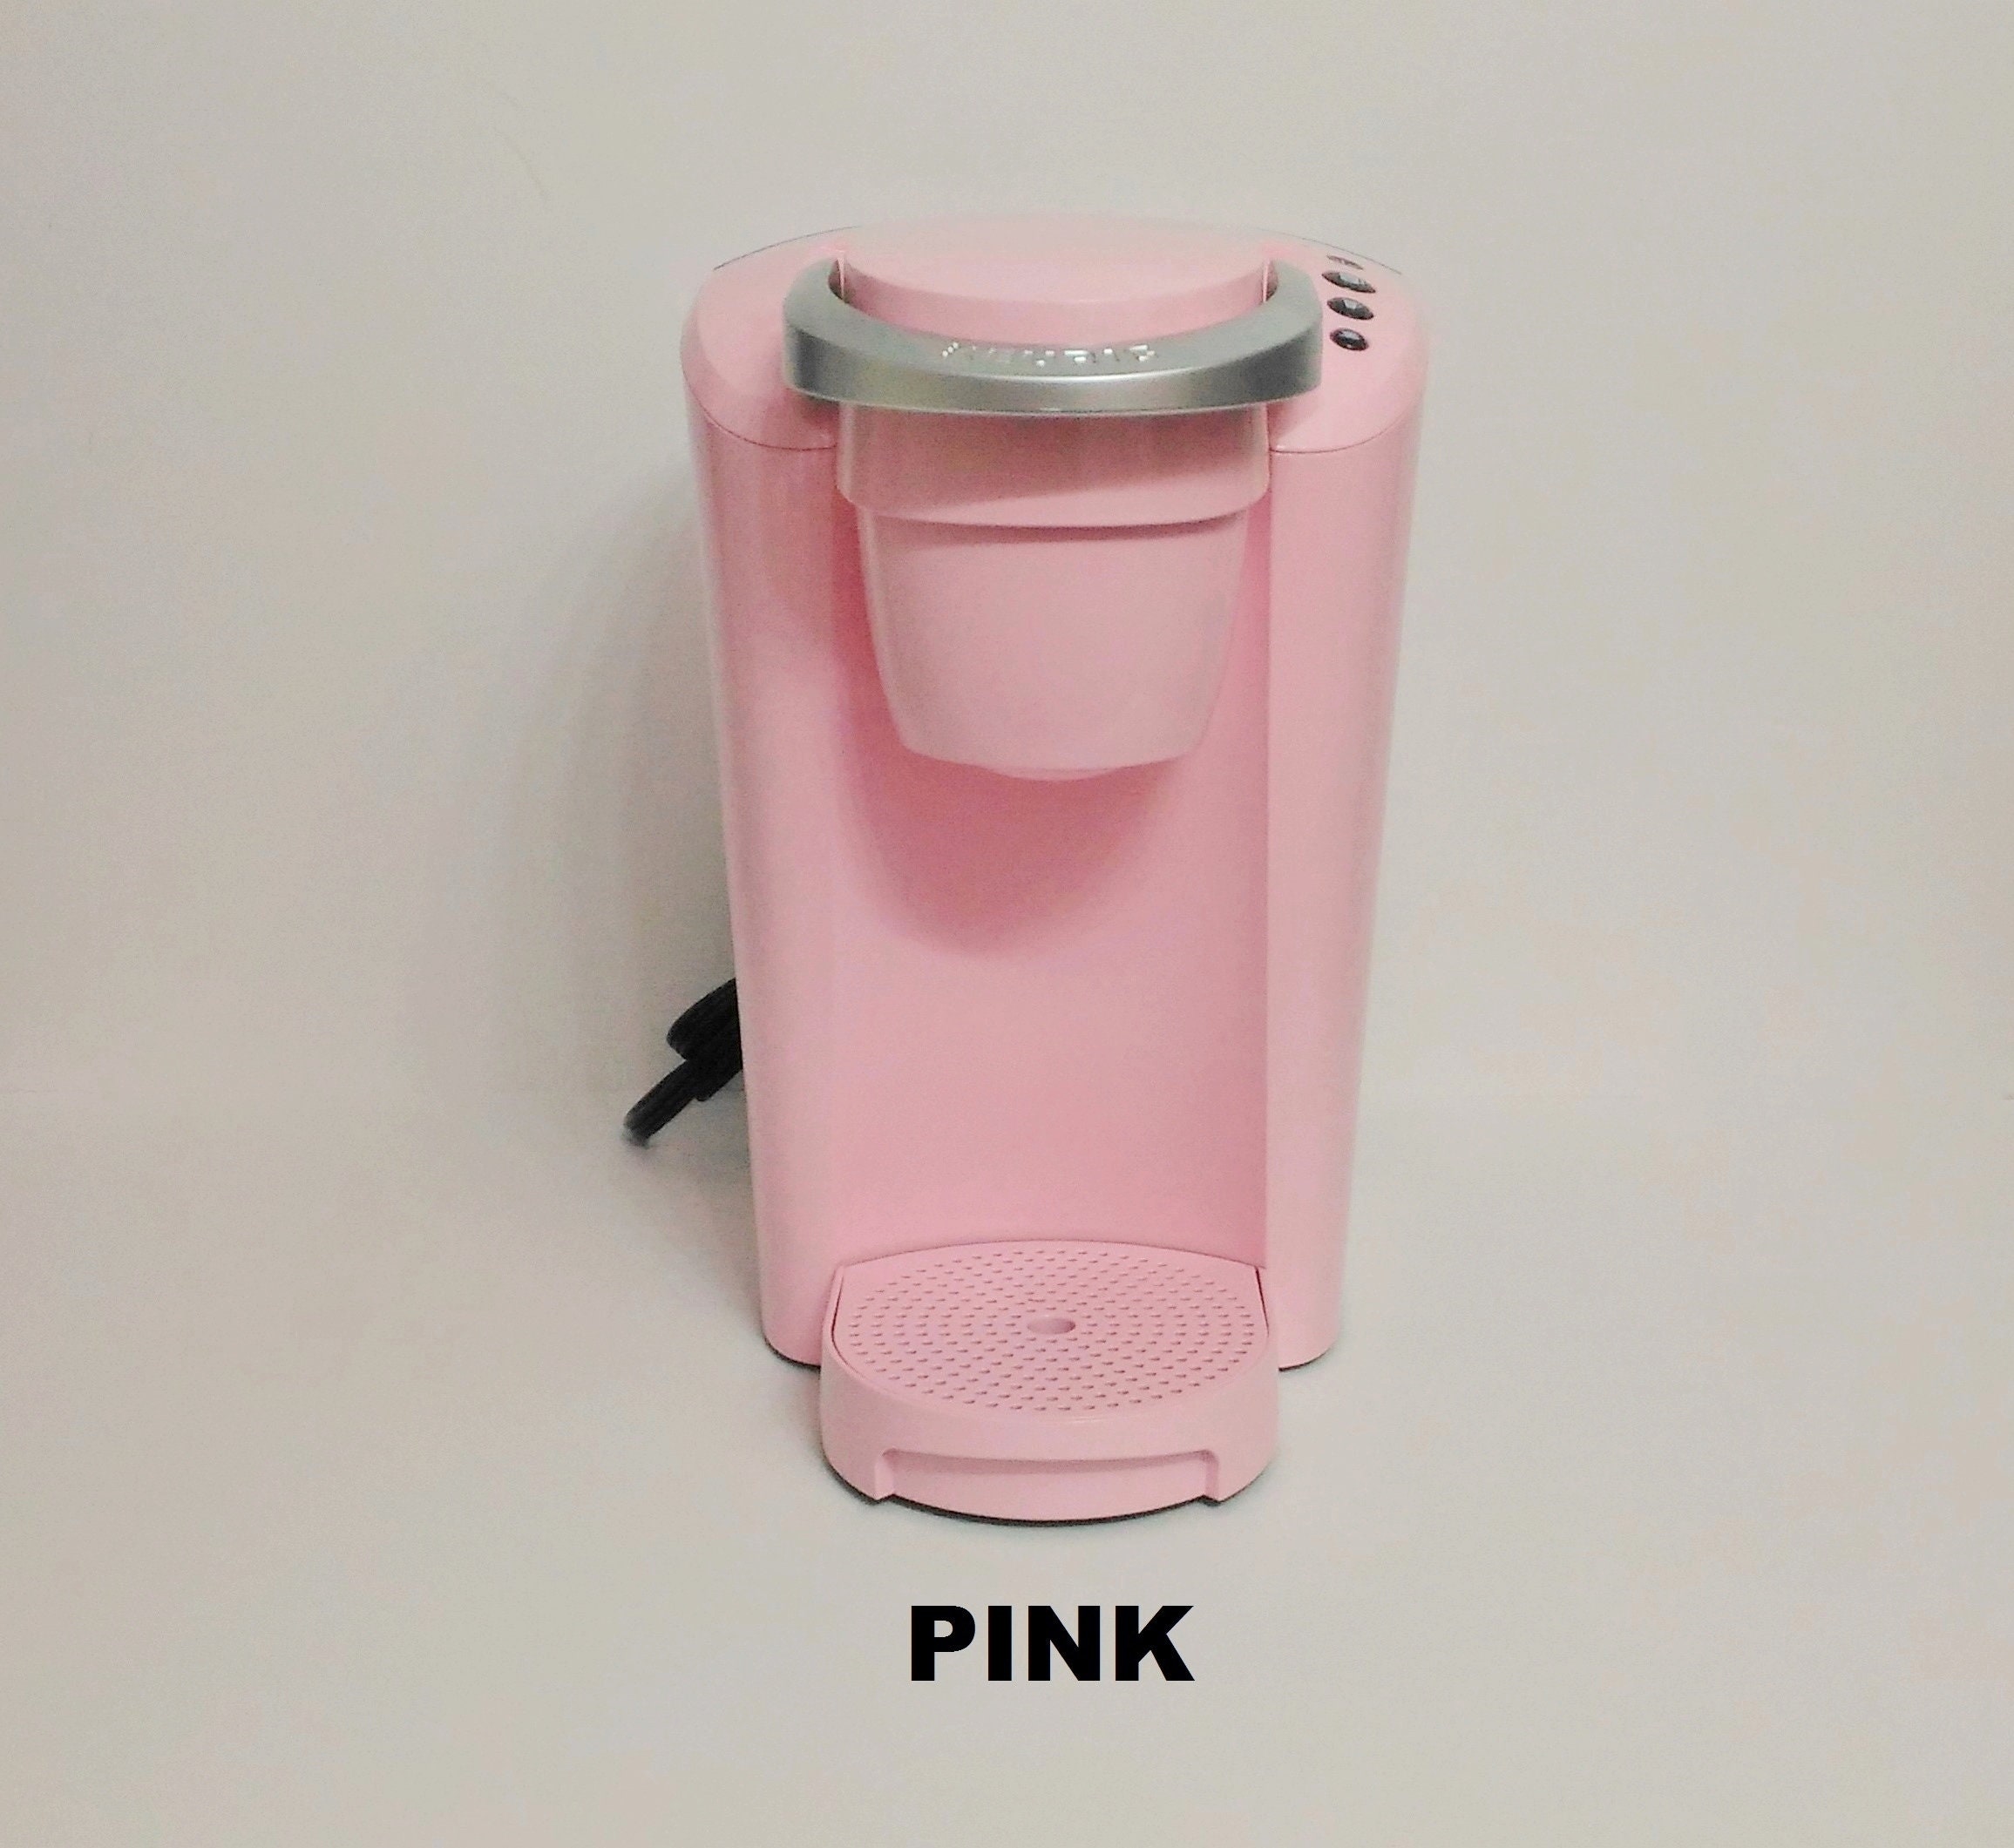 Keurig K10 and K15 Mini Plus Coffee Makers Flamingos on Pink